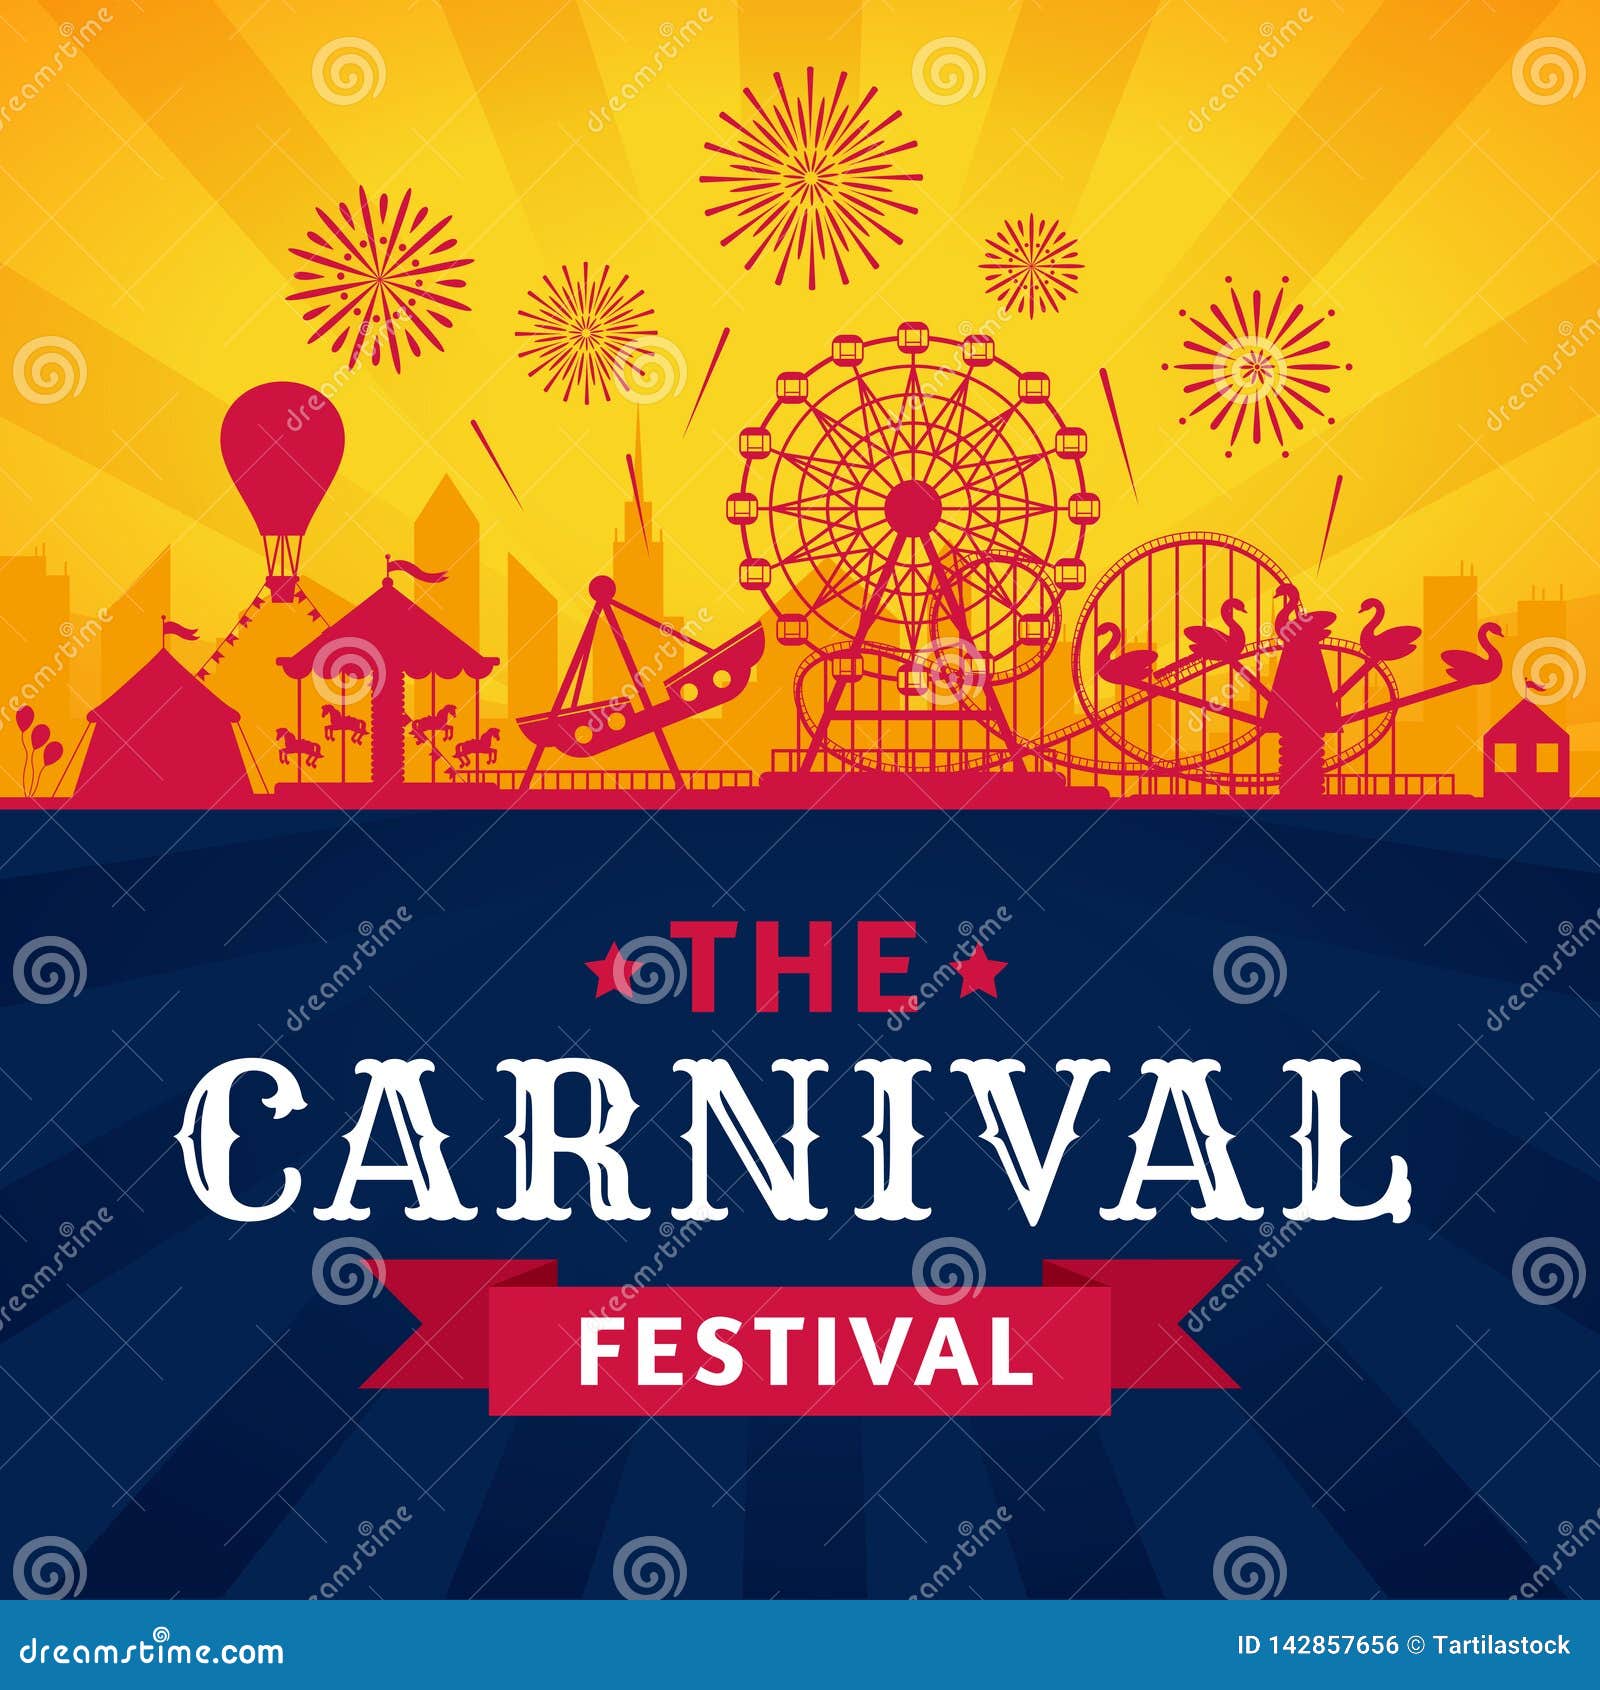 https://thumbs.dreamstime.com/z/amusement-park-poster-roller-coaster-ferris-wheel-carnival-carousel-festive-parks-attractions-vector-silhouette-background-142857656.jpg